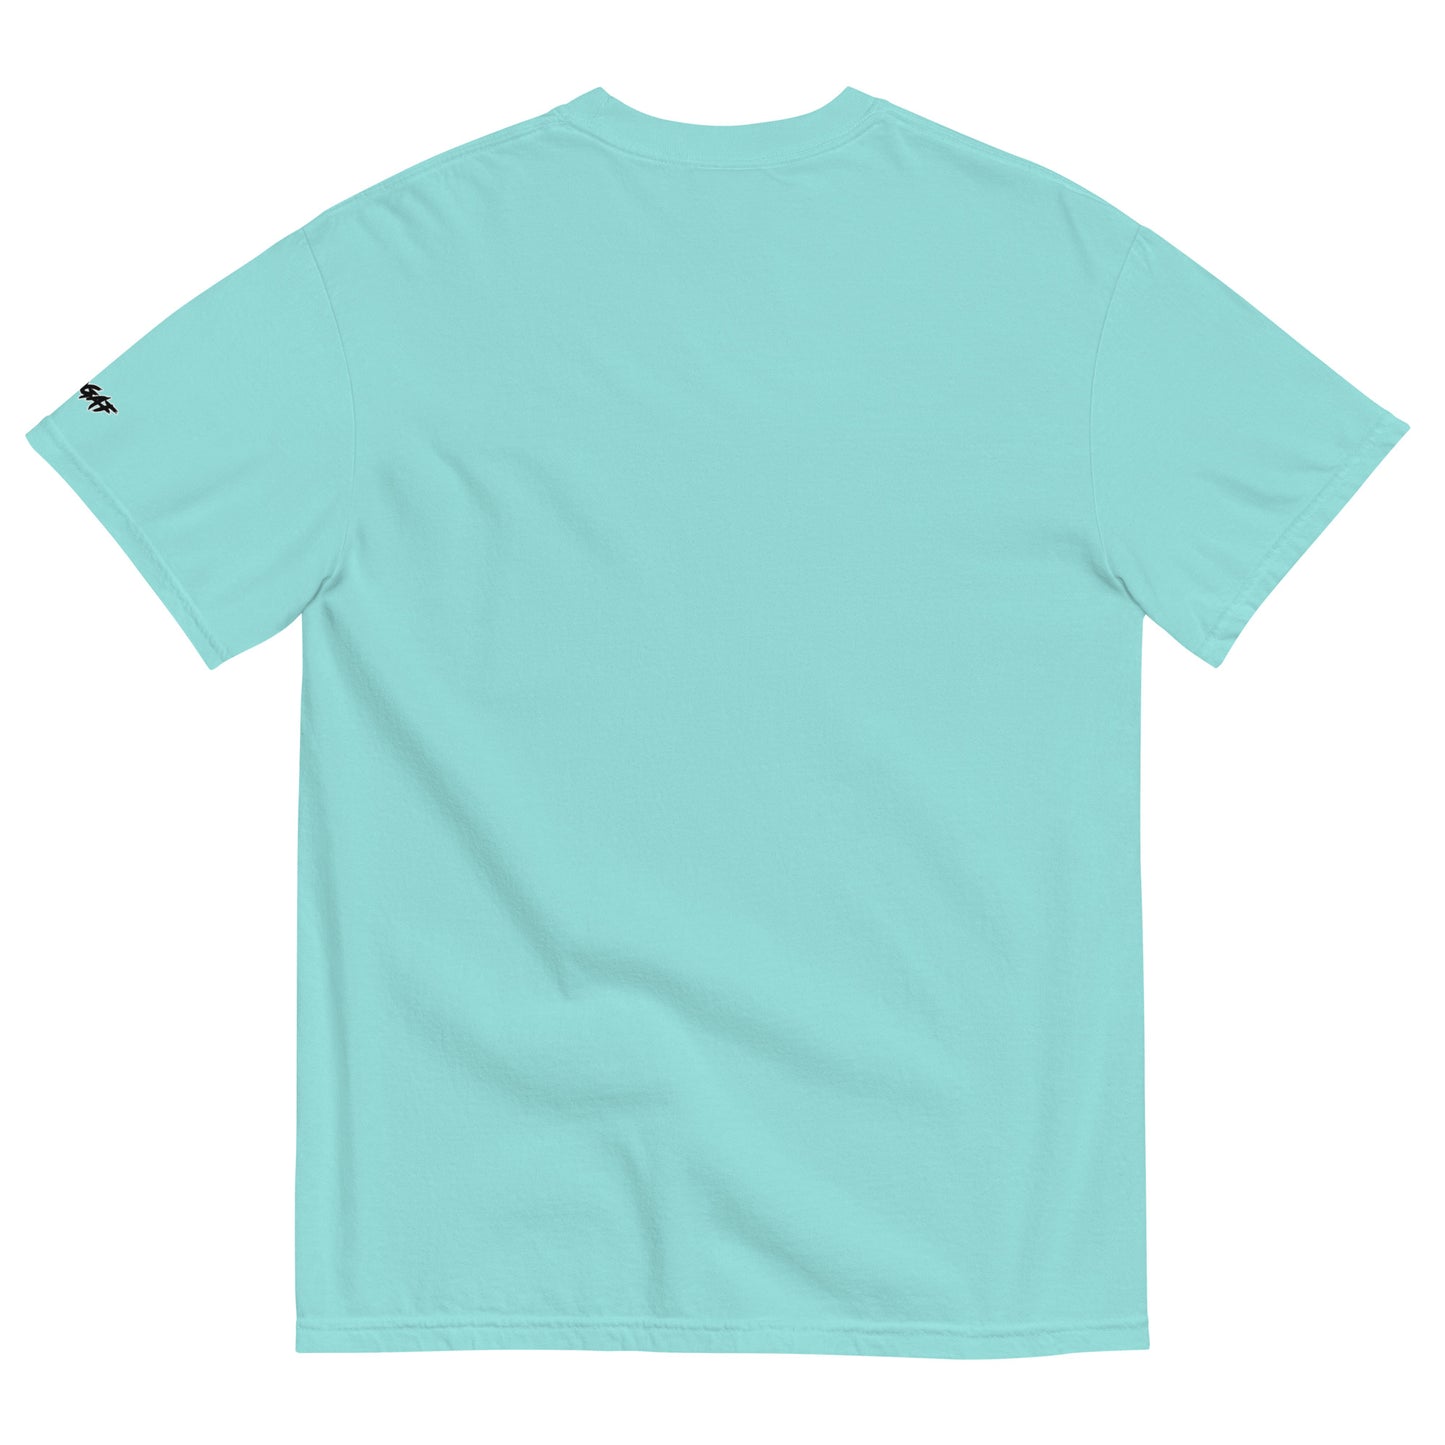 Cream Team t-shirt